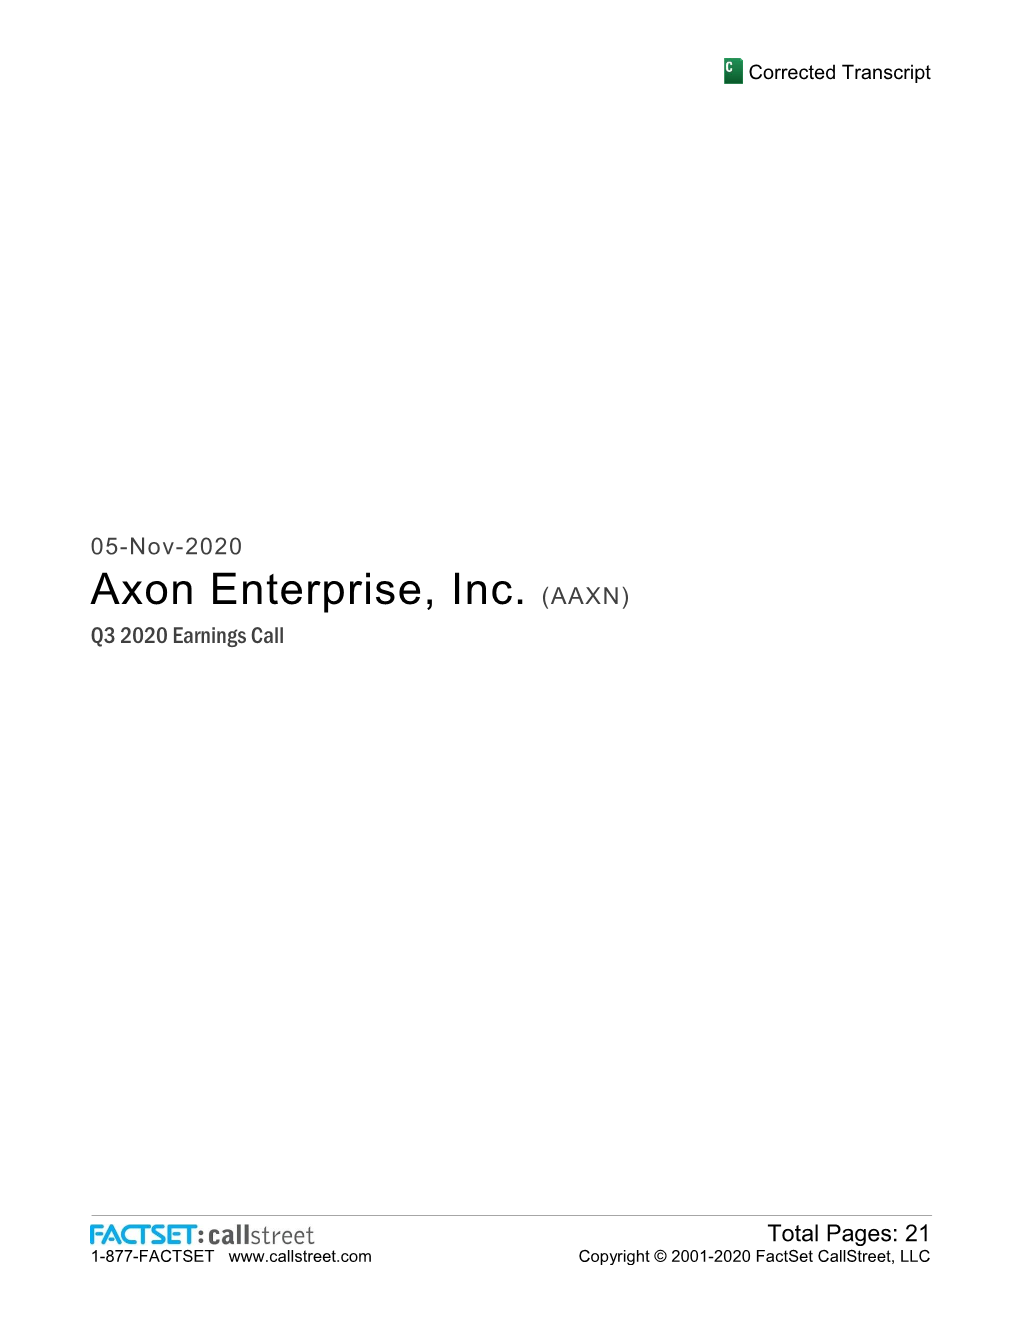 Axon Enterprise, Inc. (AAXN) Q3 2020 Earnings Call